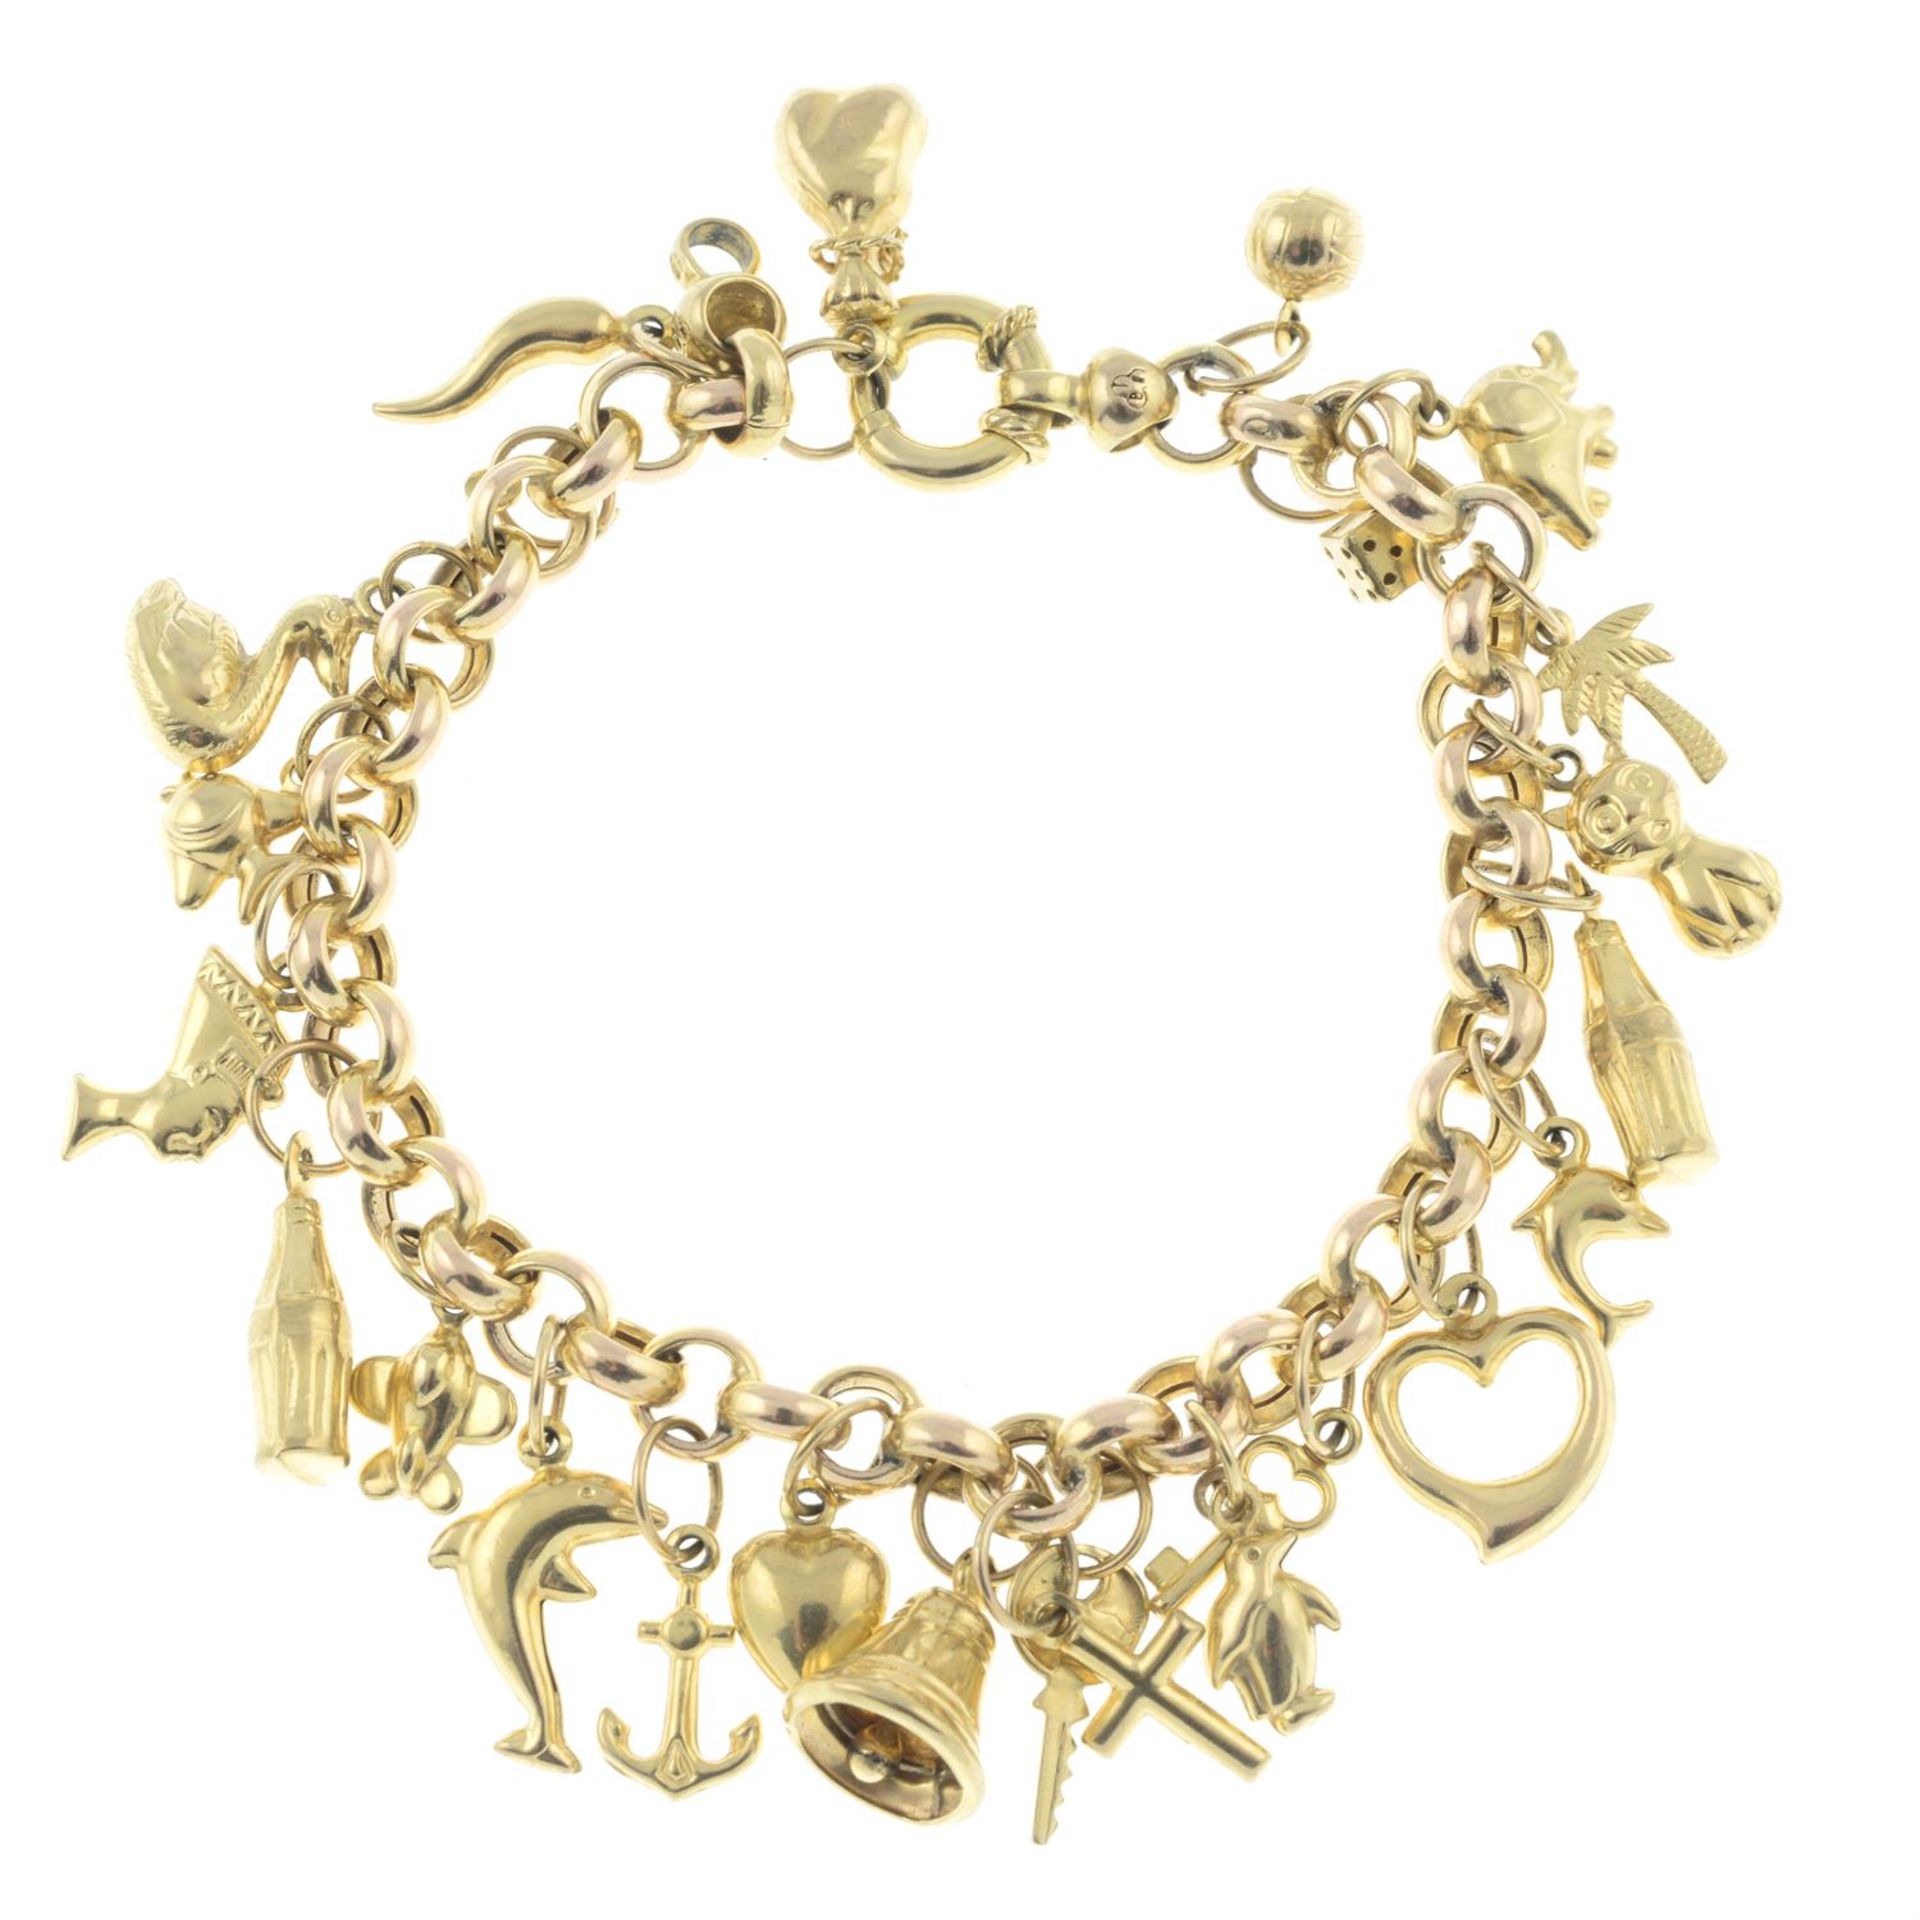 A 9ct gold charm bracelet, suspending twenty-three charms.